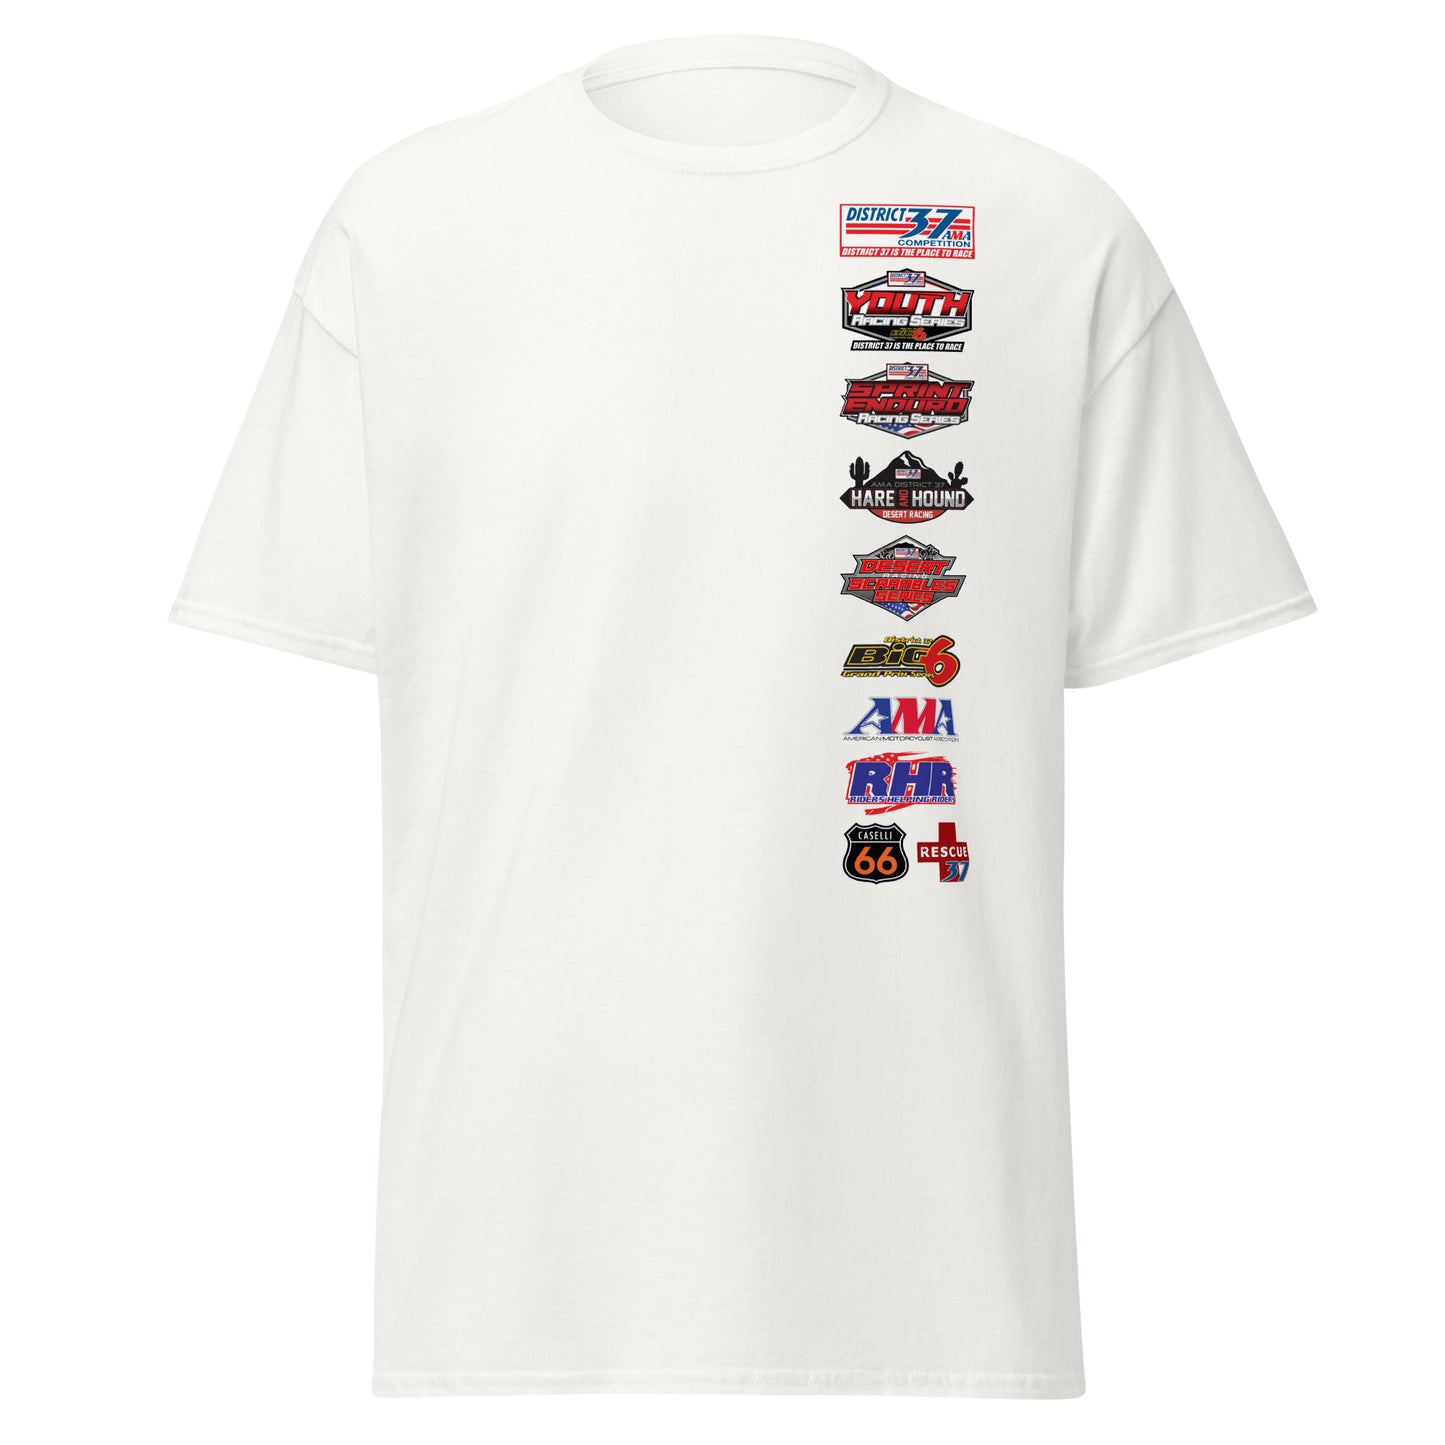 D37 Big 6 Grand Prix Series Shirt - Adult Size Shirt